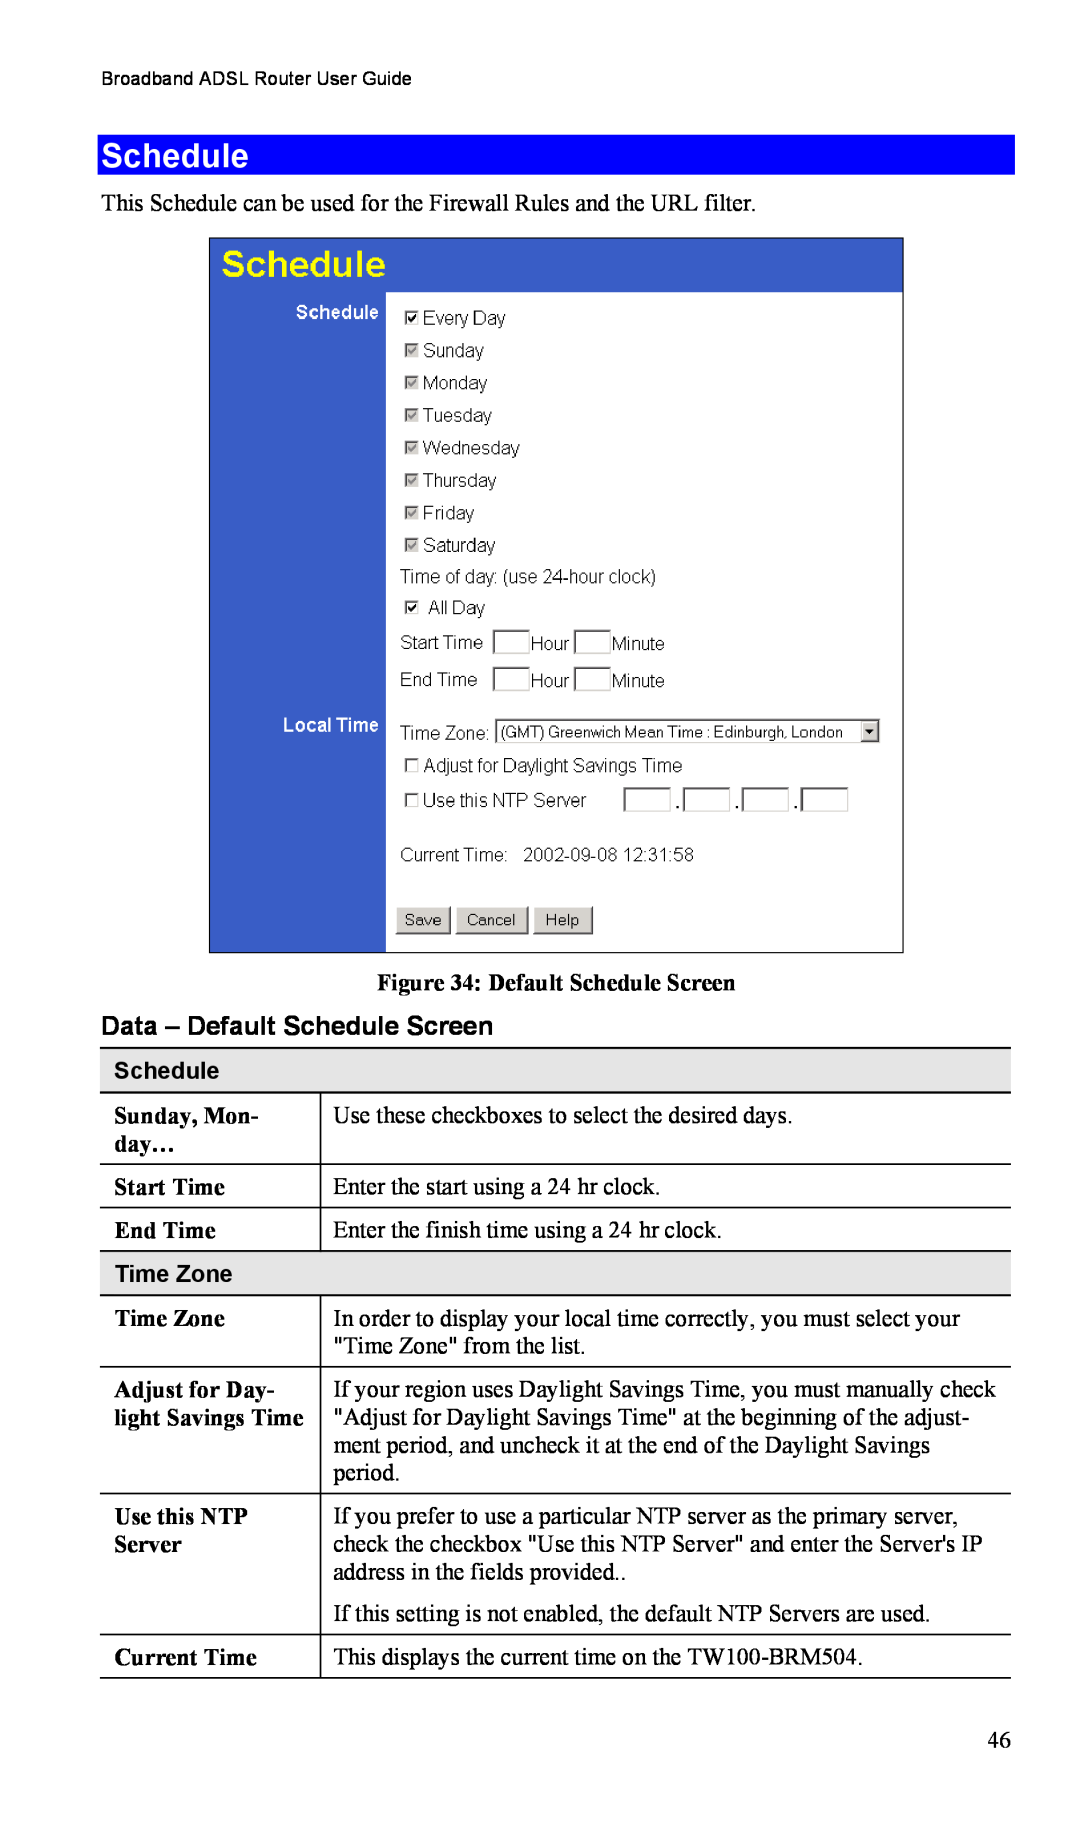 TRENDnet TW100-BRM504 manual Data - Default Schedule Screen, Time Zone 